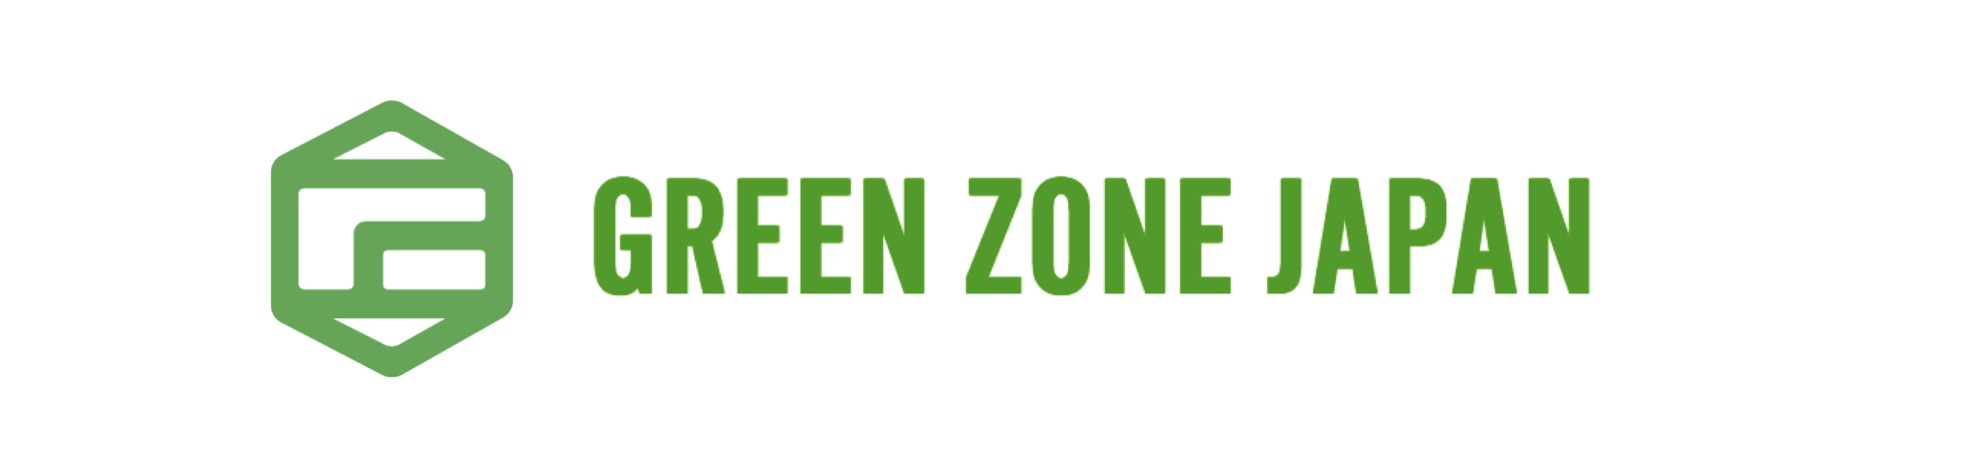 green zone japan